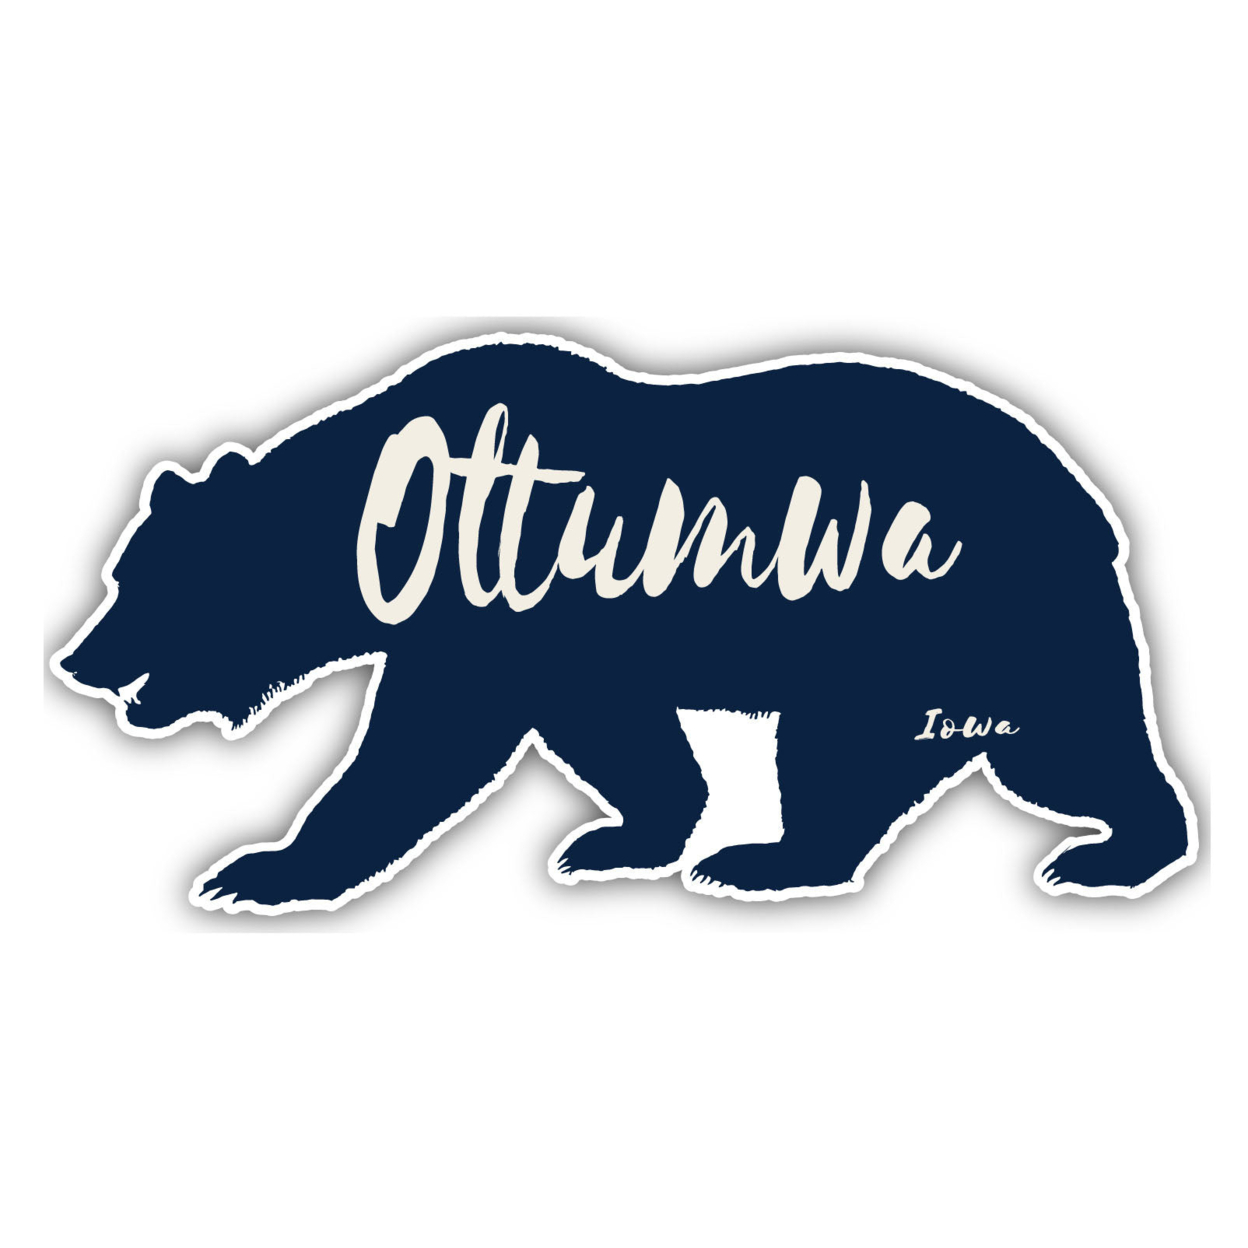 Ottumwa Iowa Souvenir Decorative Stickers (Choose Theme And Size) - Single Unit, 4-Inch, Bear